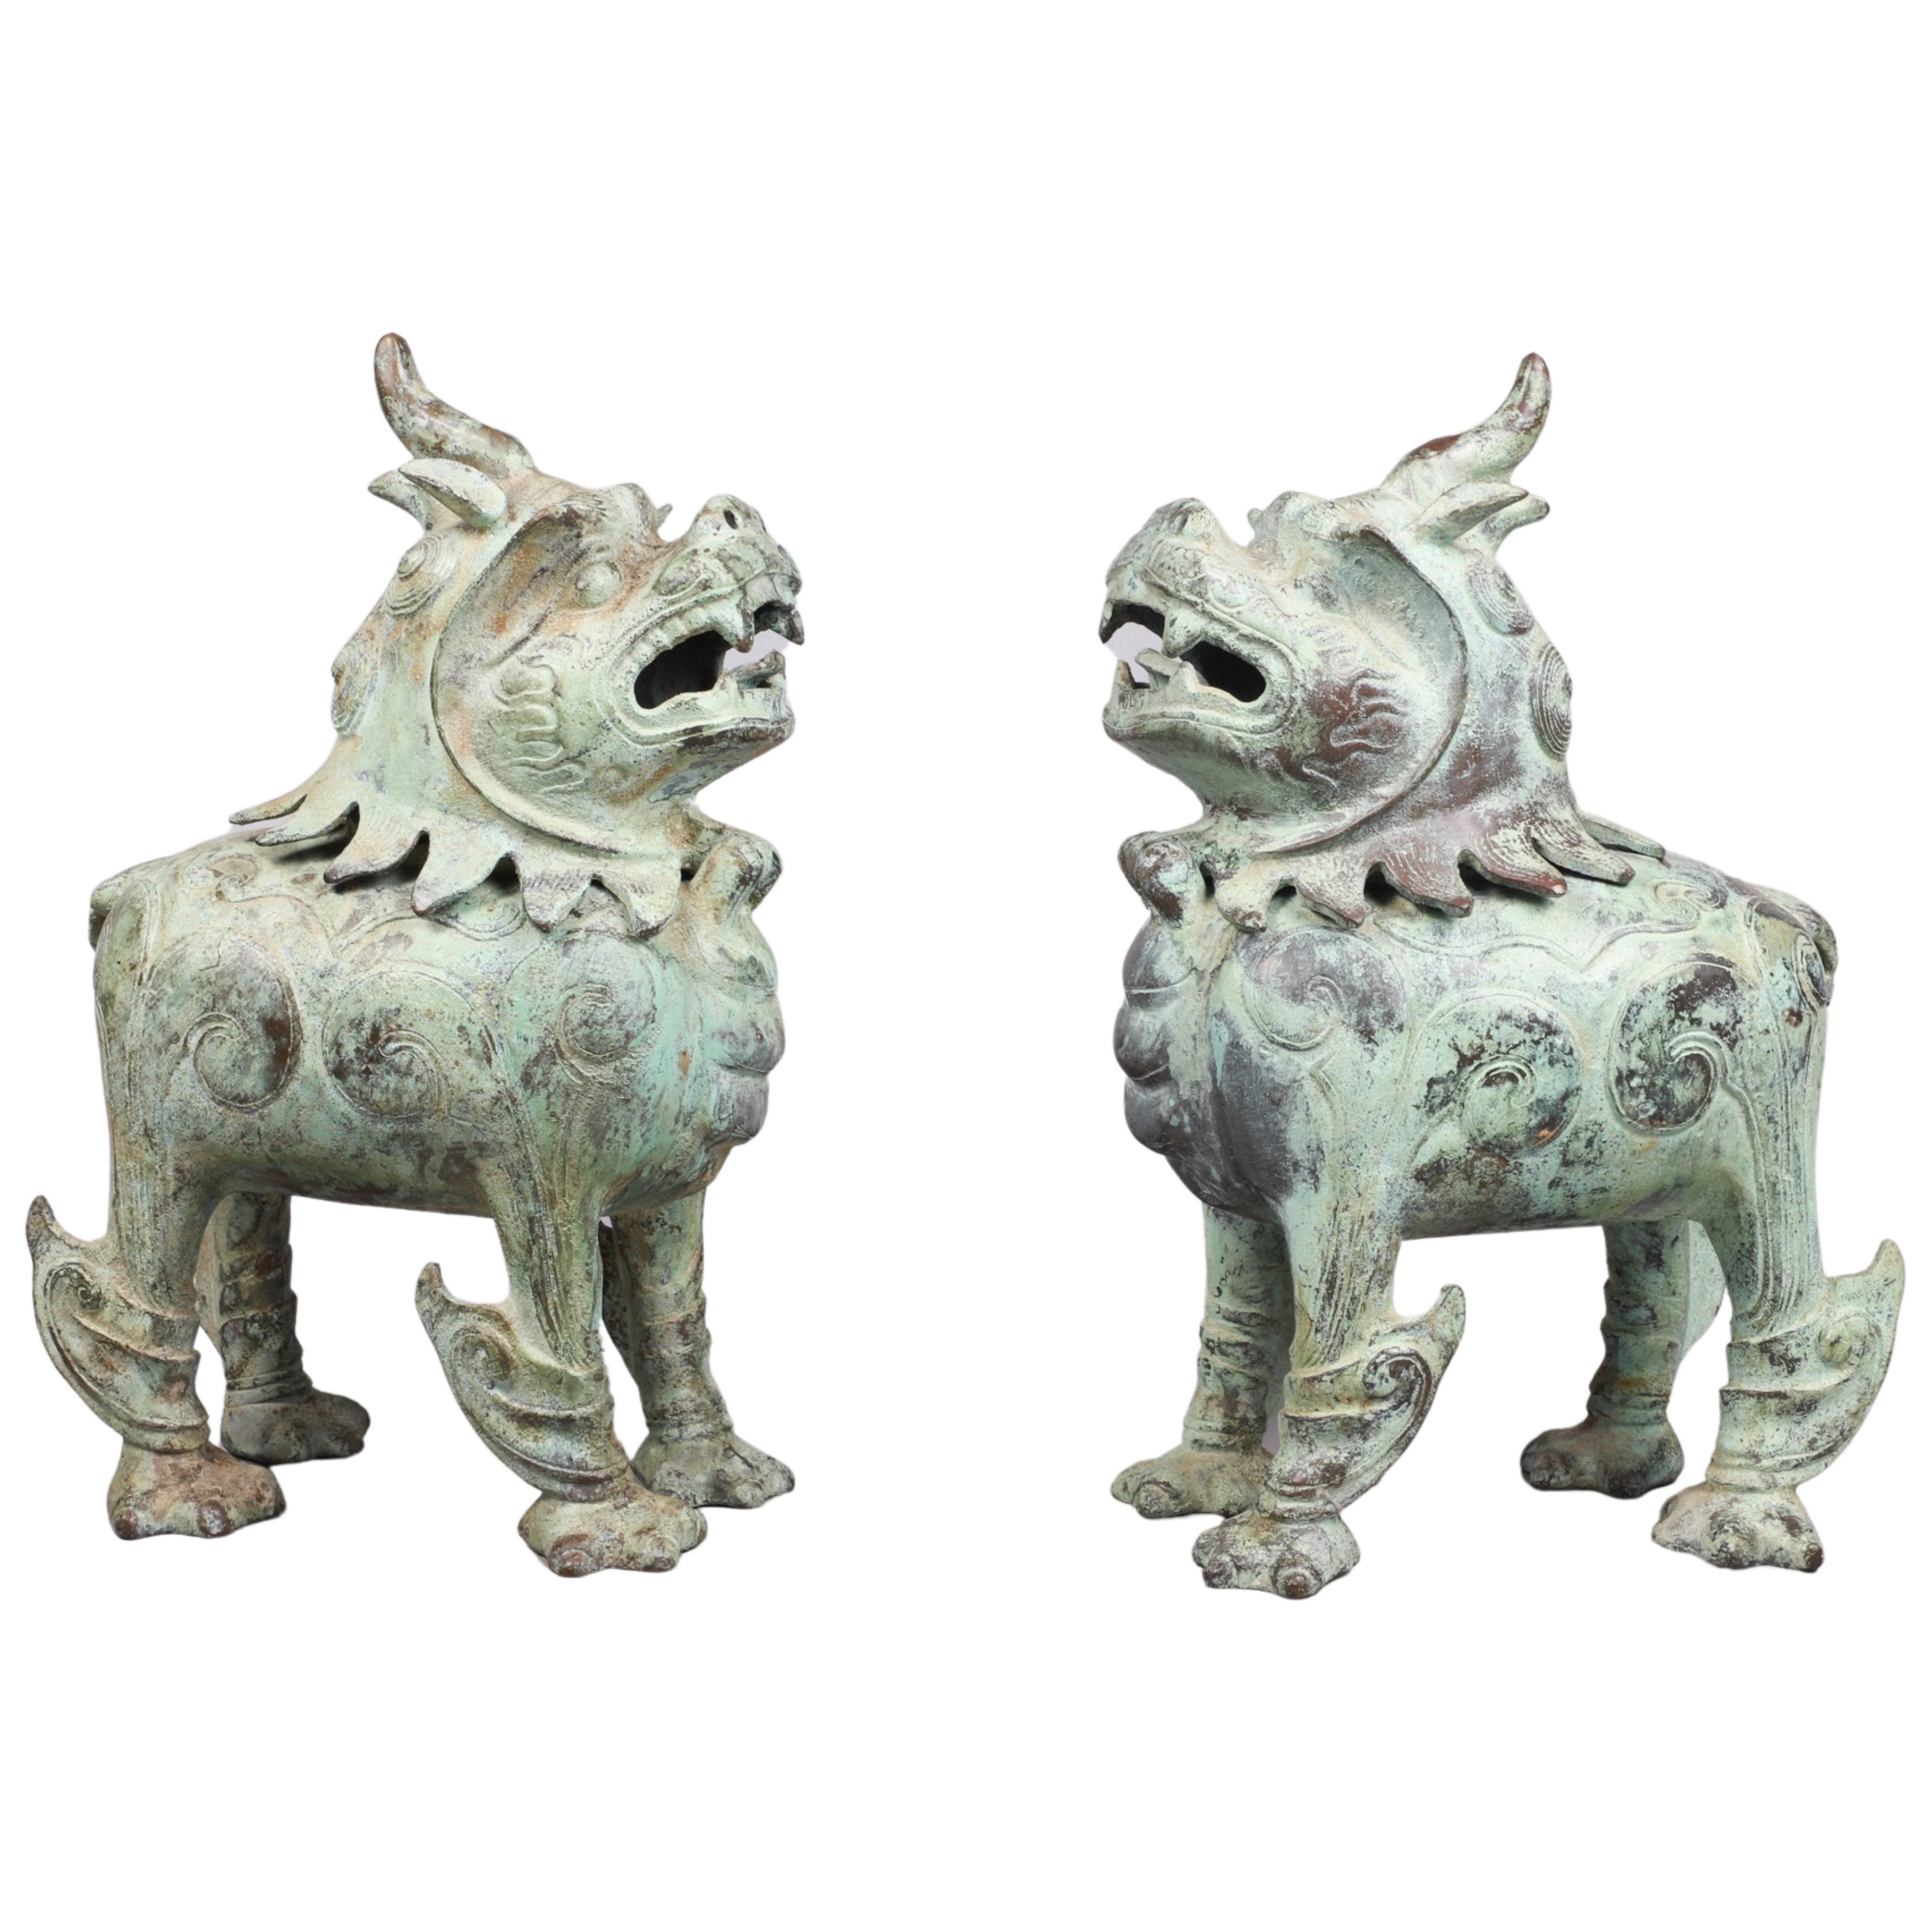 Pair of Asian patinated bronze